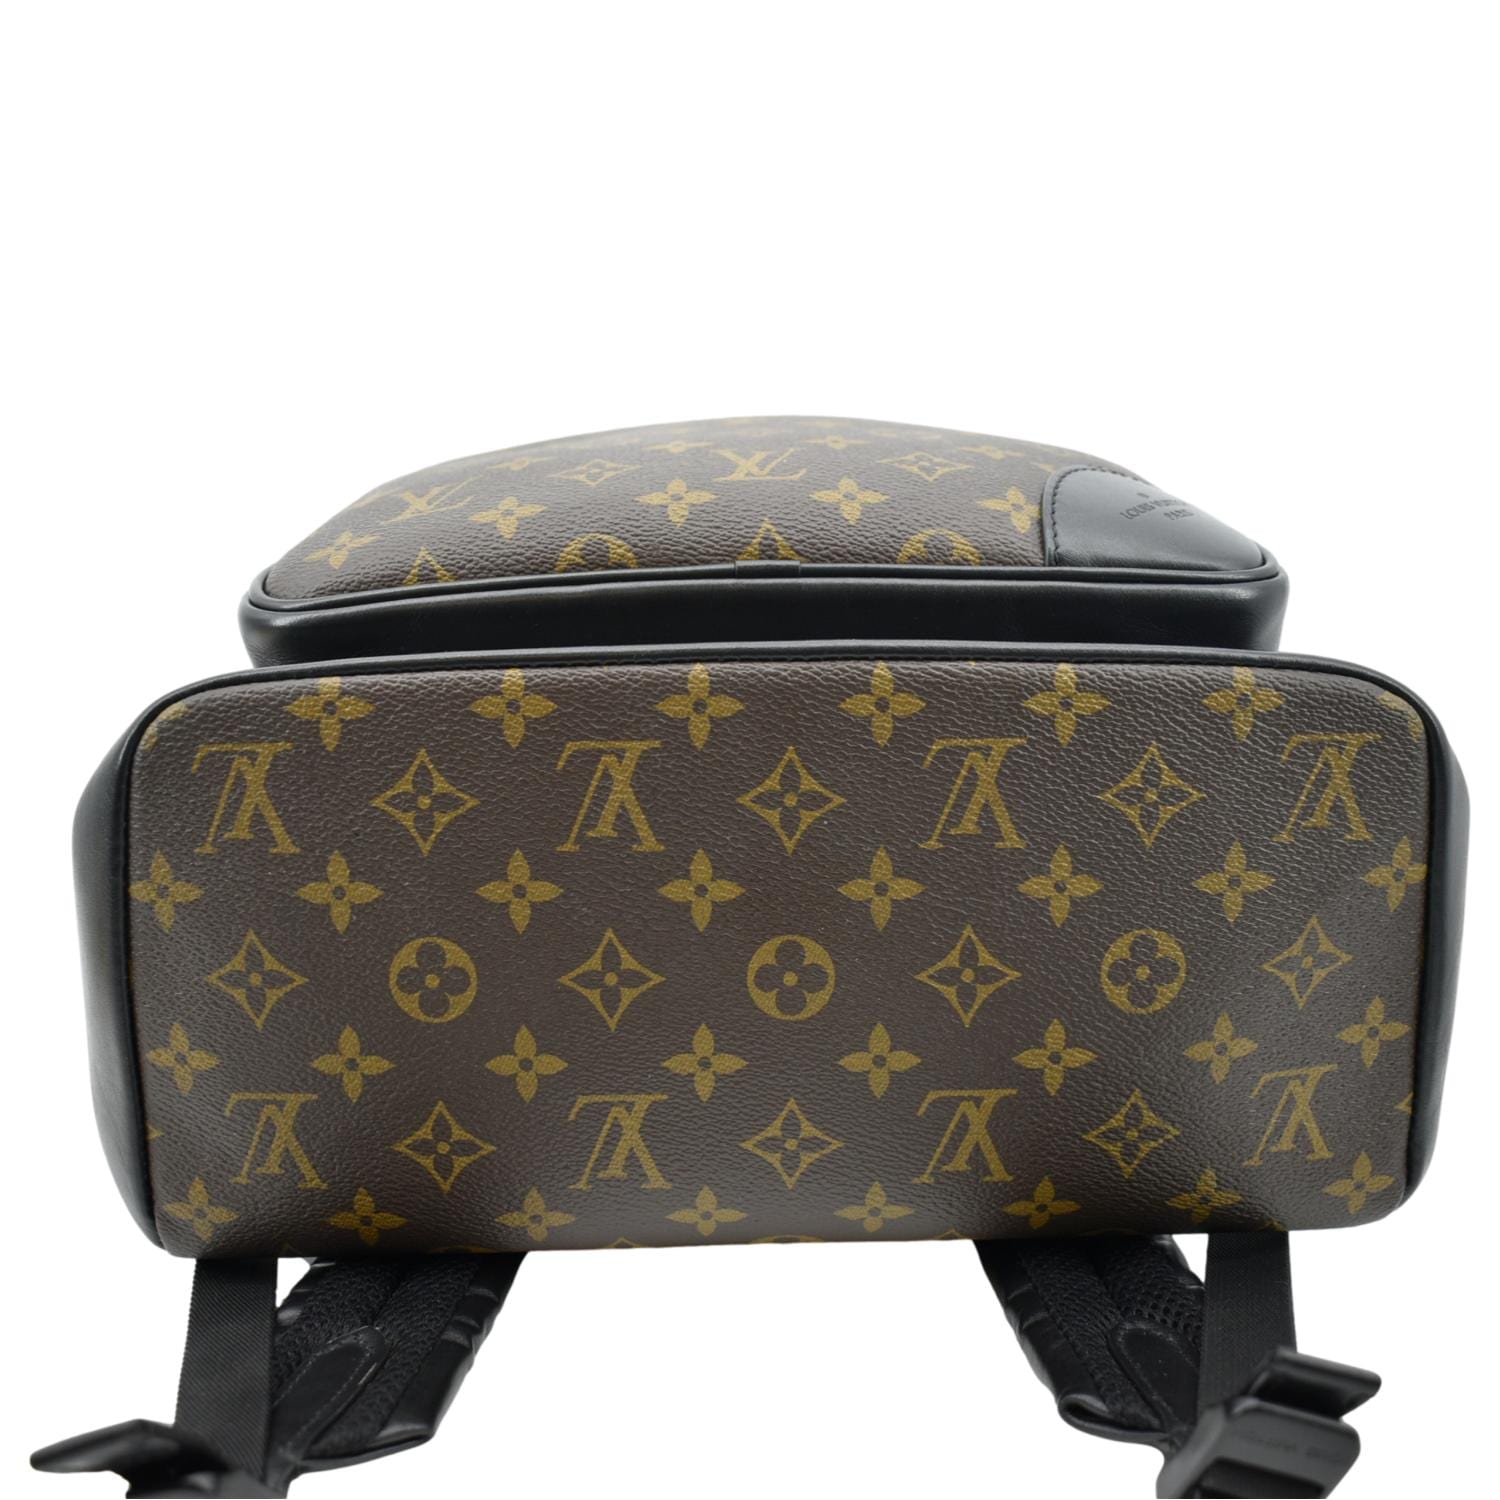 515 Louis Vuitton Shopping Bag Stock Photos - Free & Royalty-Free